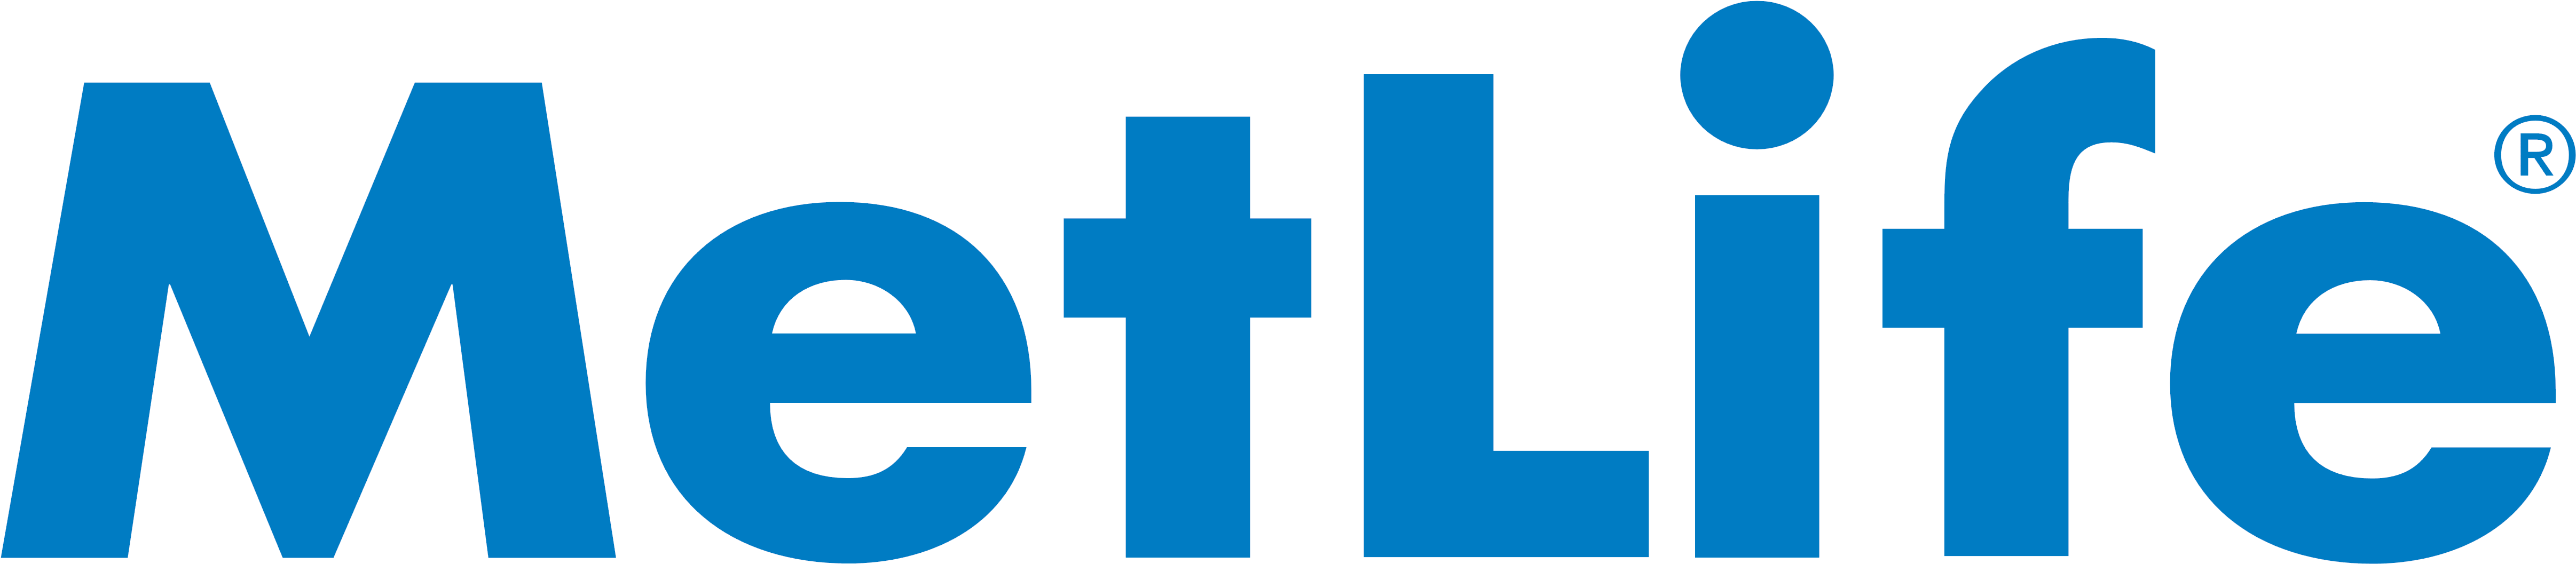 Metlife Logo New Vector And Clip Art Inspiration U2022 - Metlife Logo Png (5000x1166)